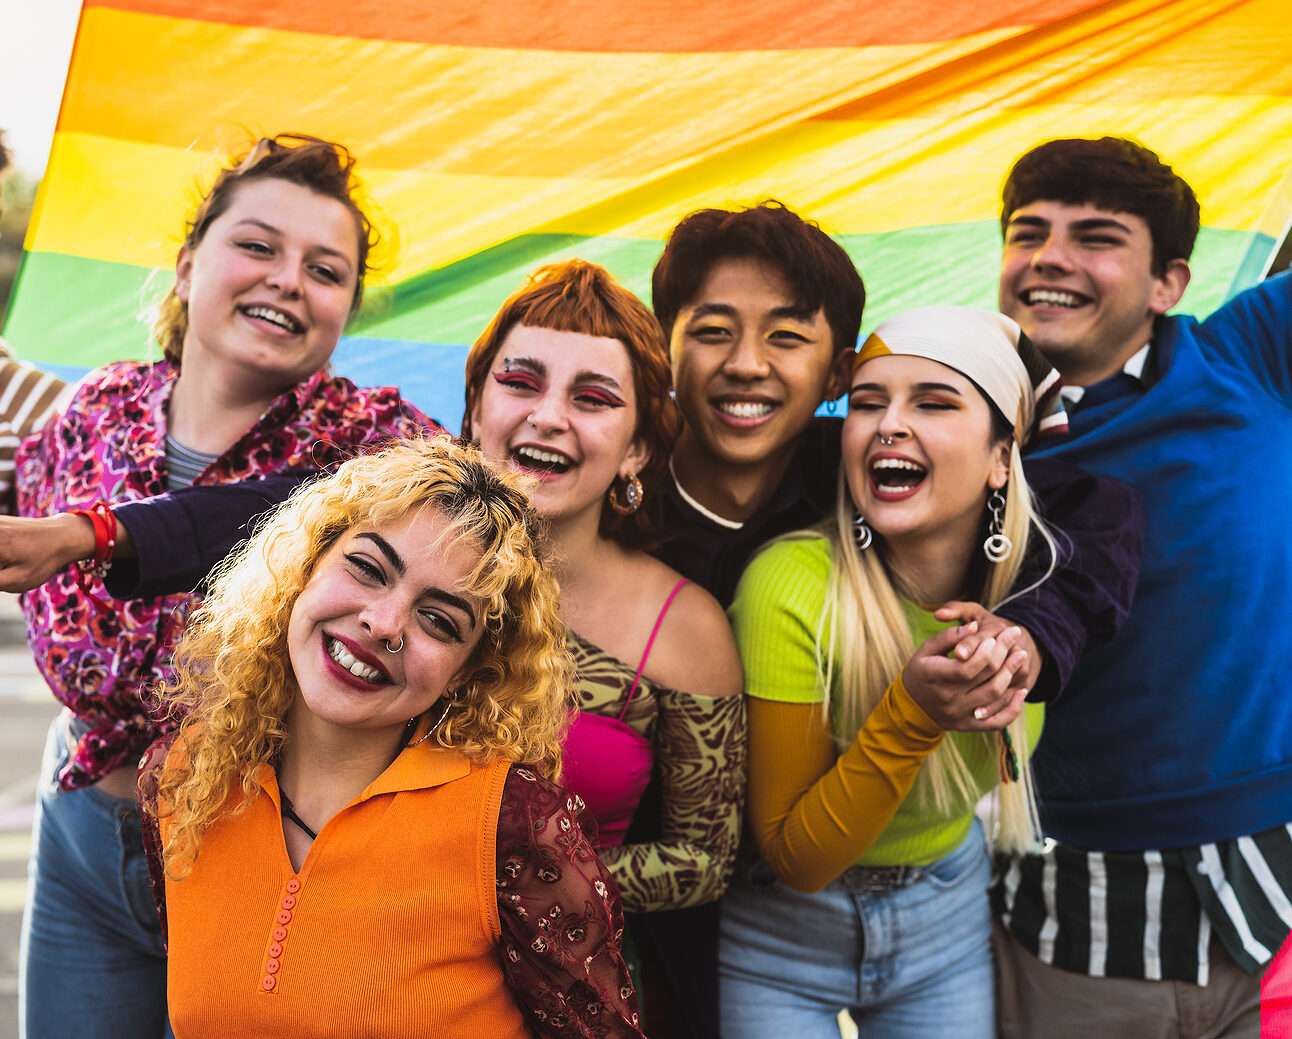 Happy diverse young friends celebrating gay pride festival - LGBTQ community concept